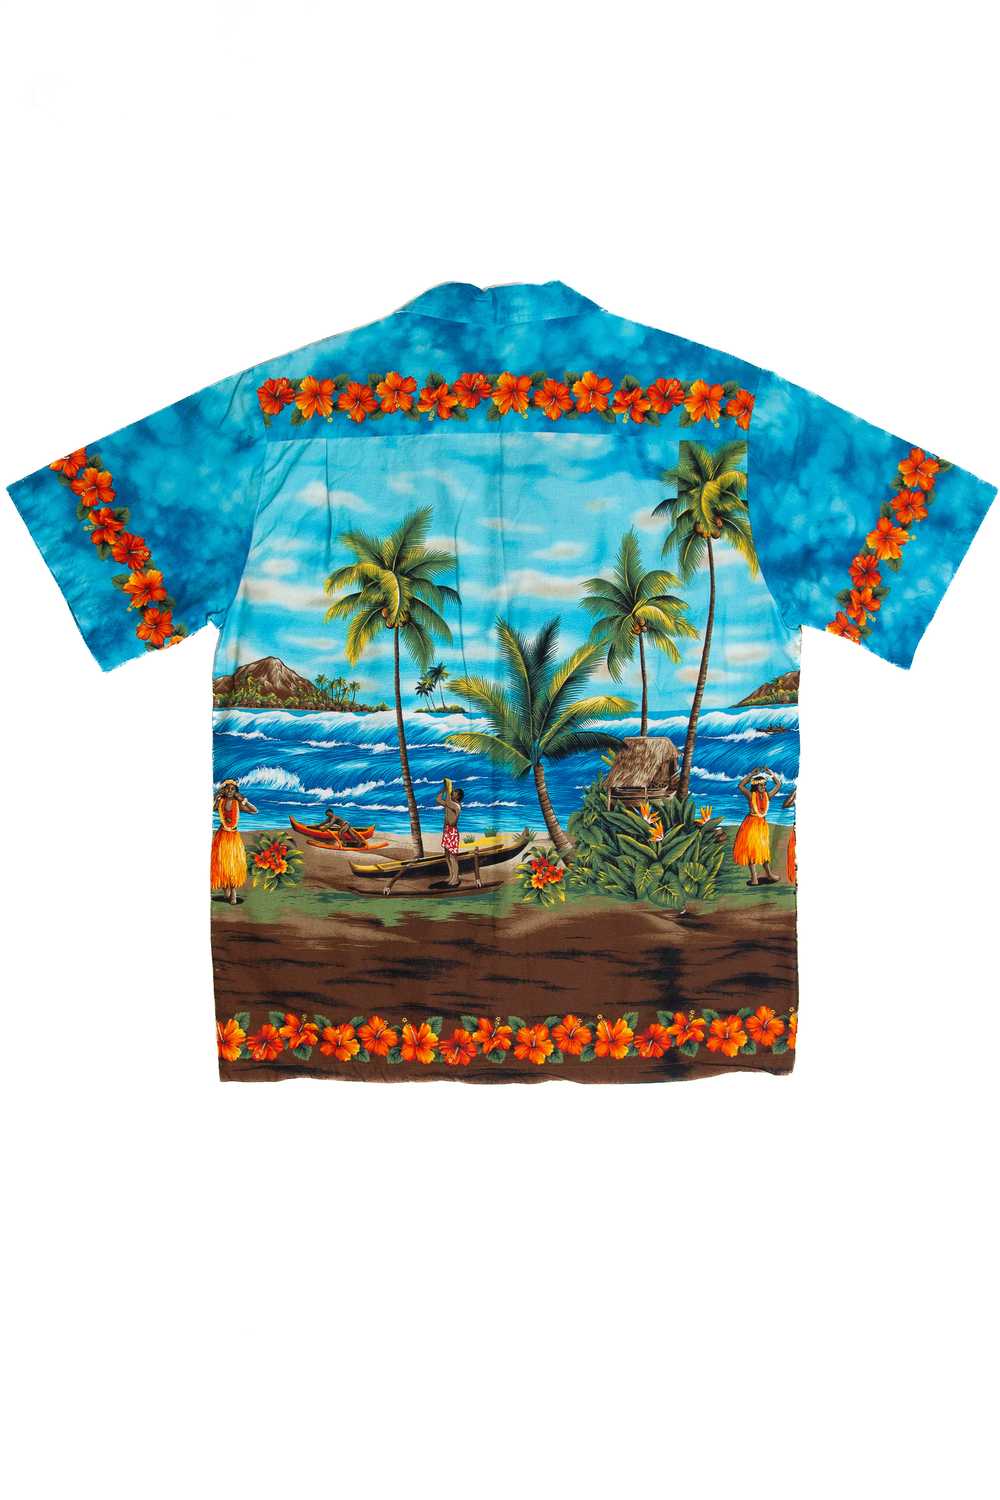 Vintage Hana Fashion Hawaiian Shirt - image 3